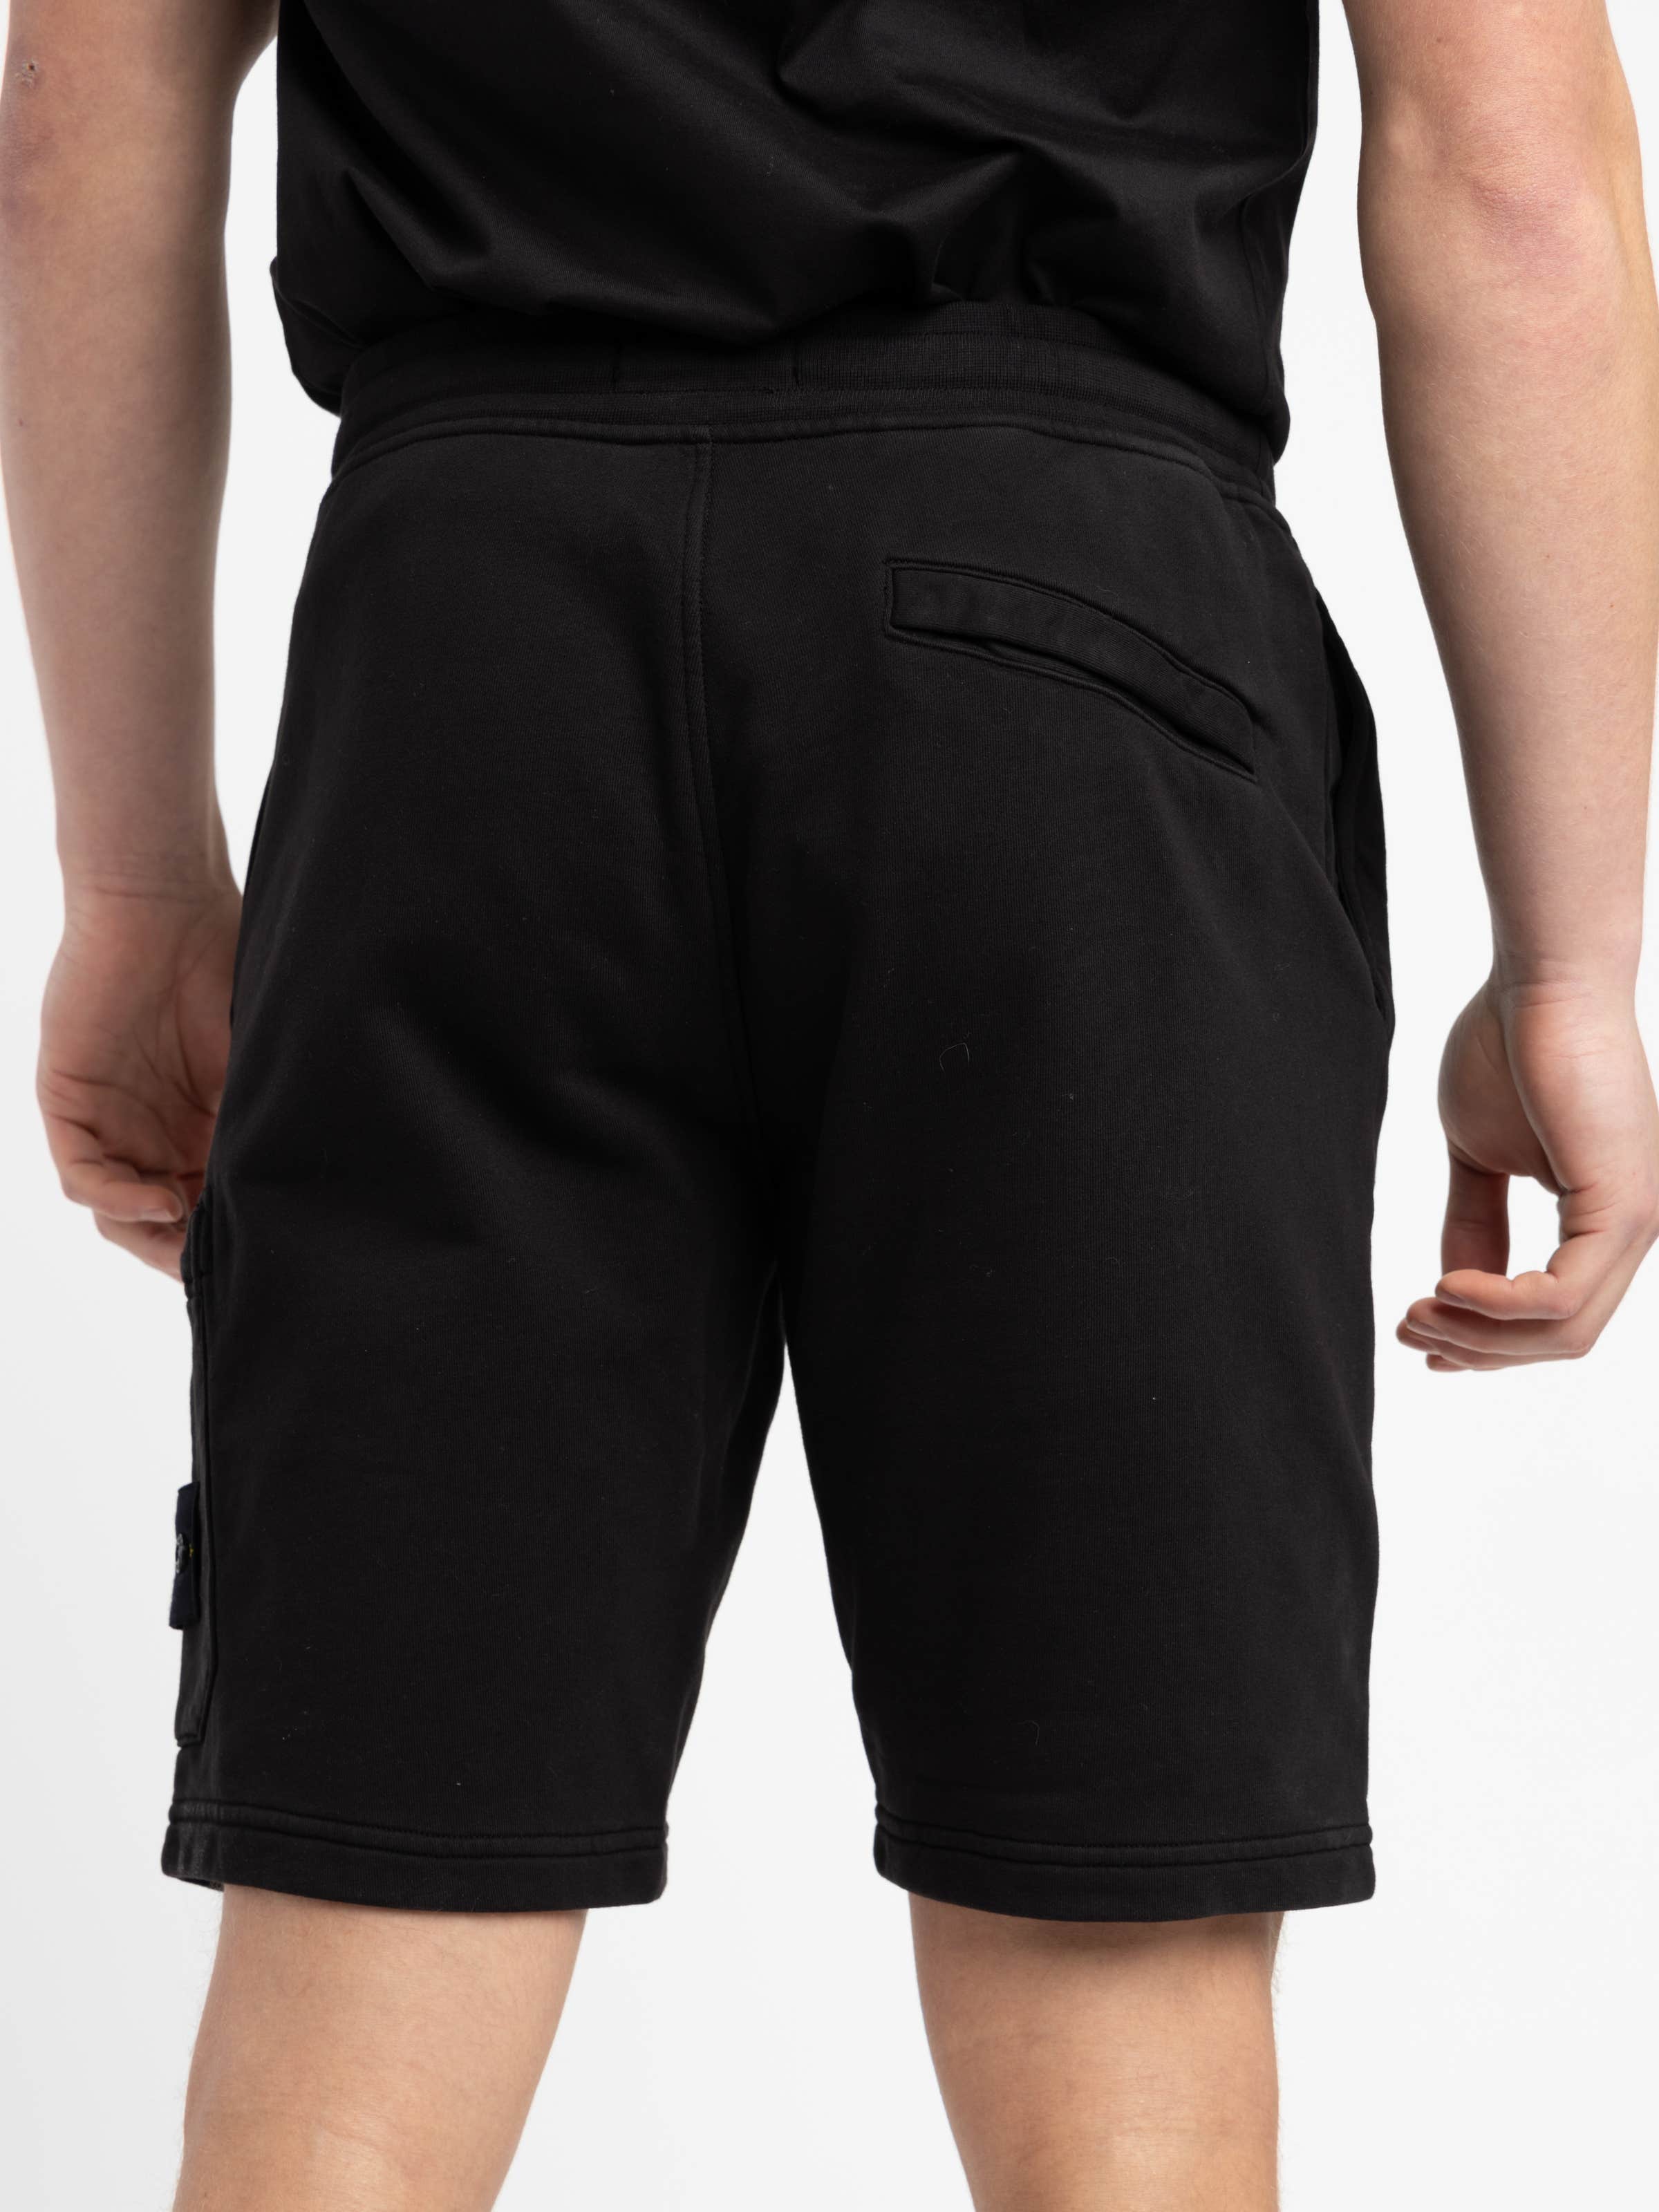 Black Cotton Shorts